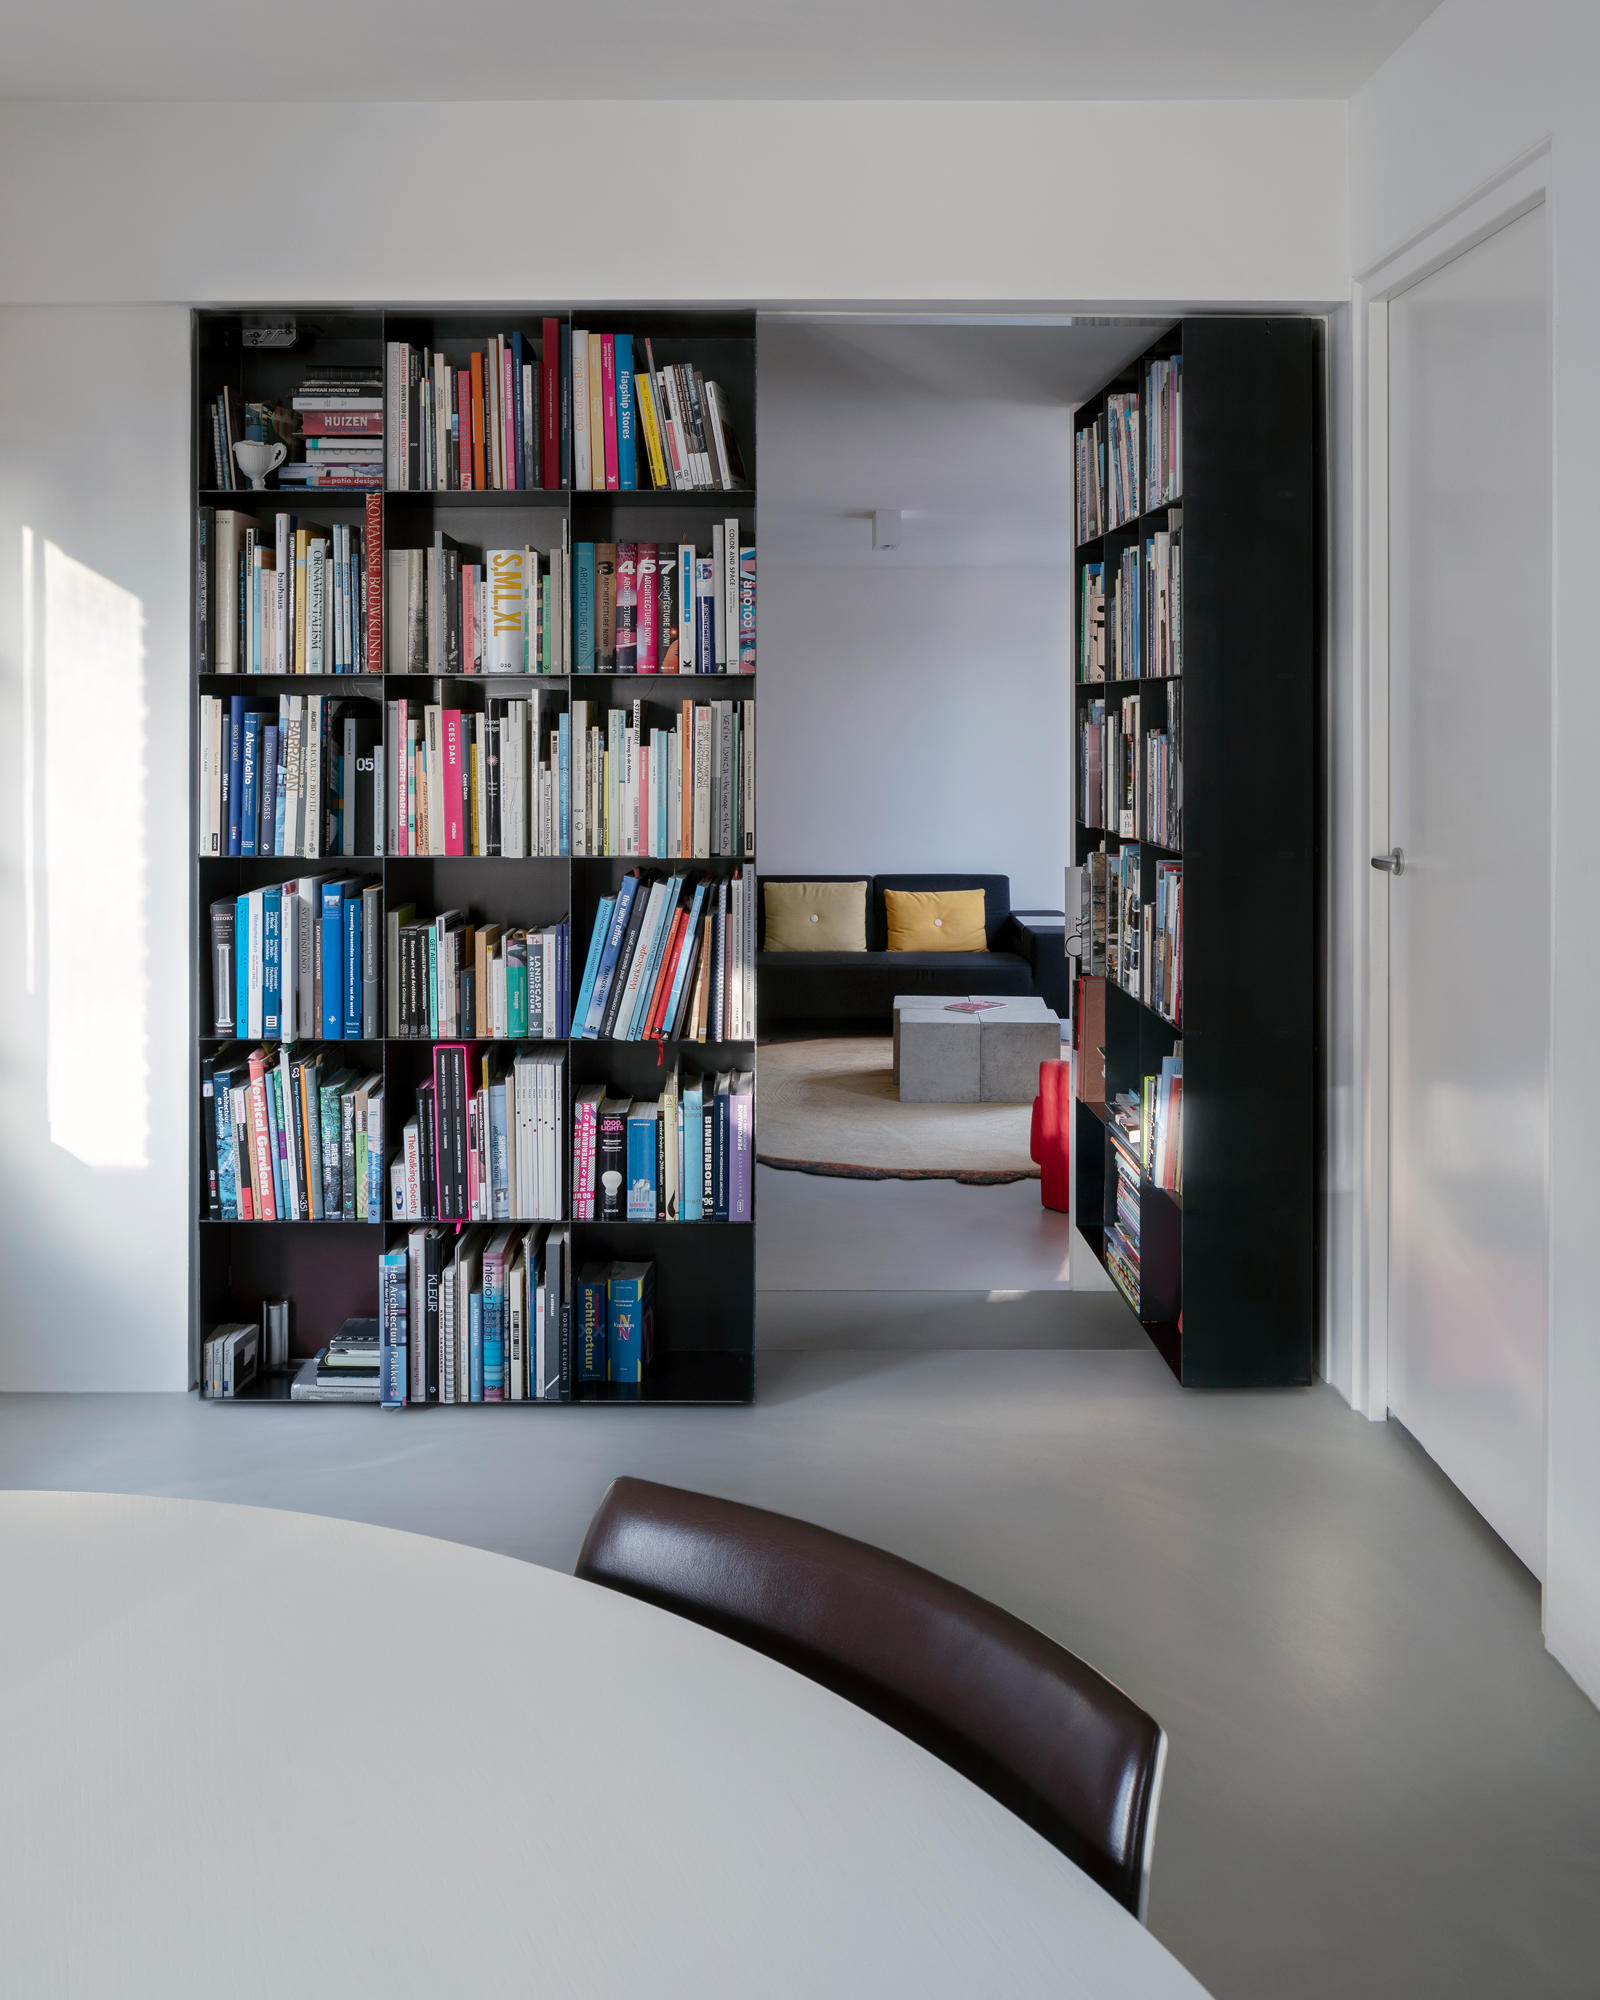 Pivoting Bookshelf Project By Ernst Hoek By Fritsjurgens